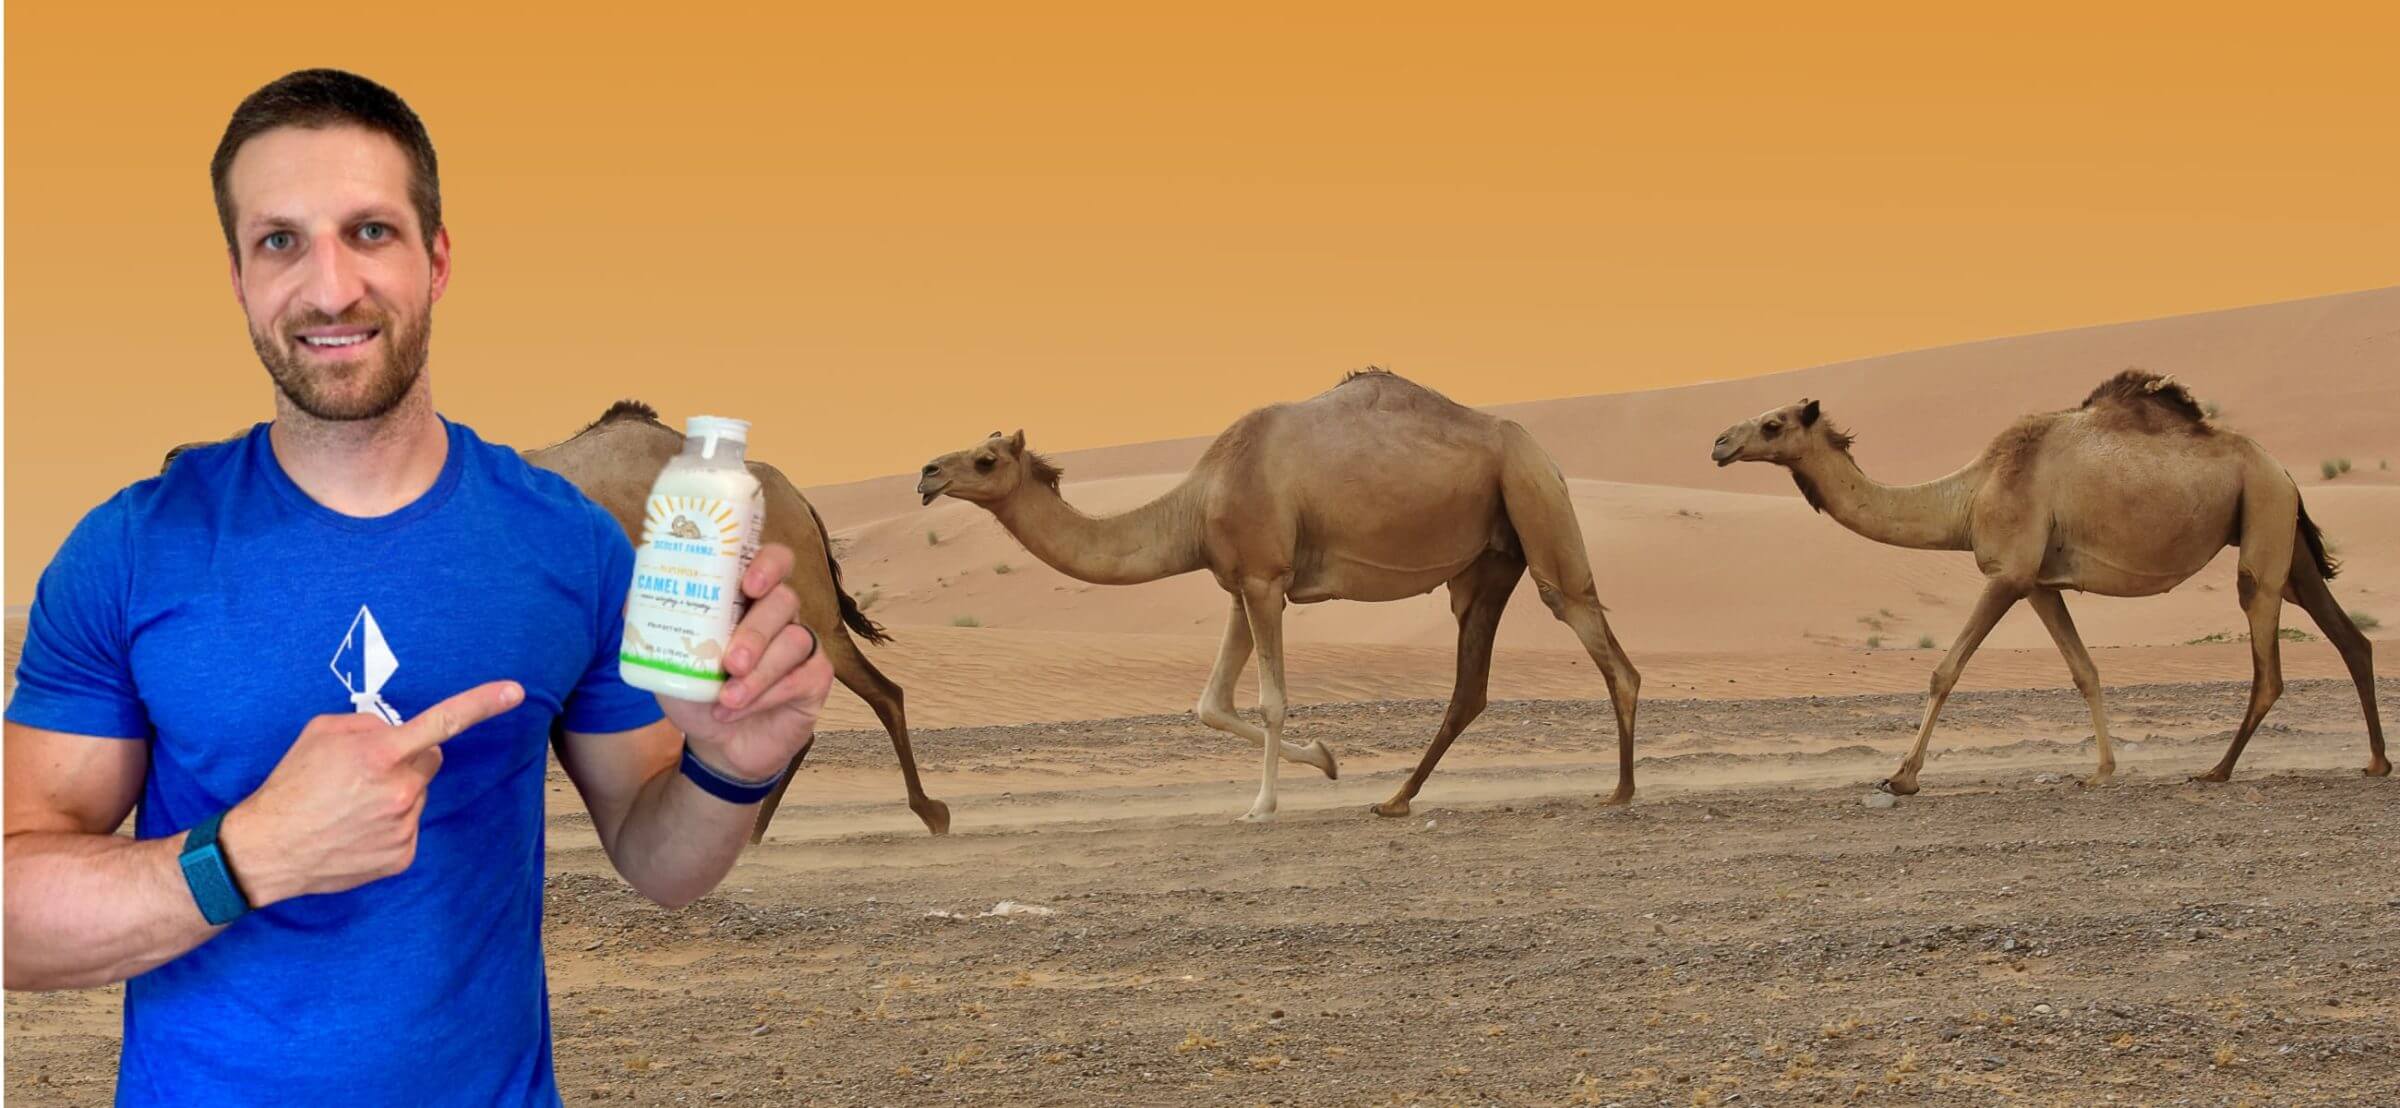 Is camel milk healthier than cow milk